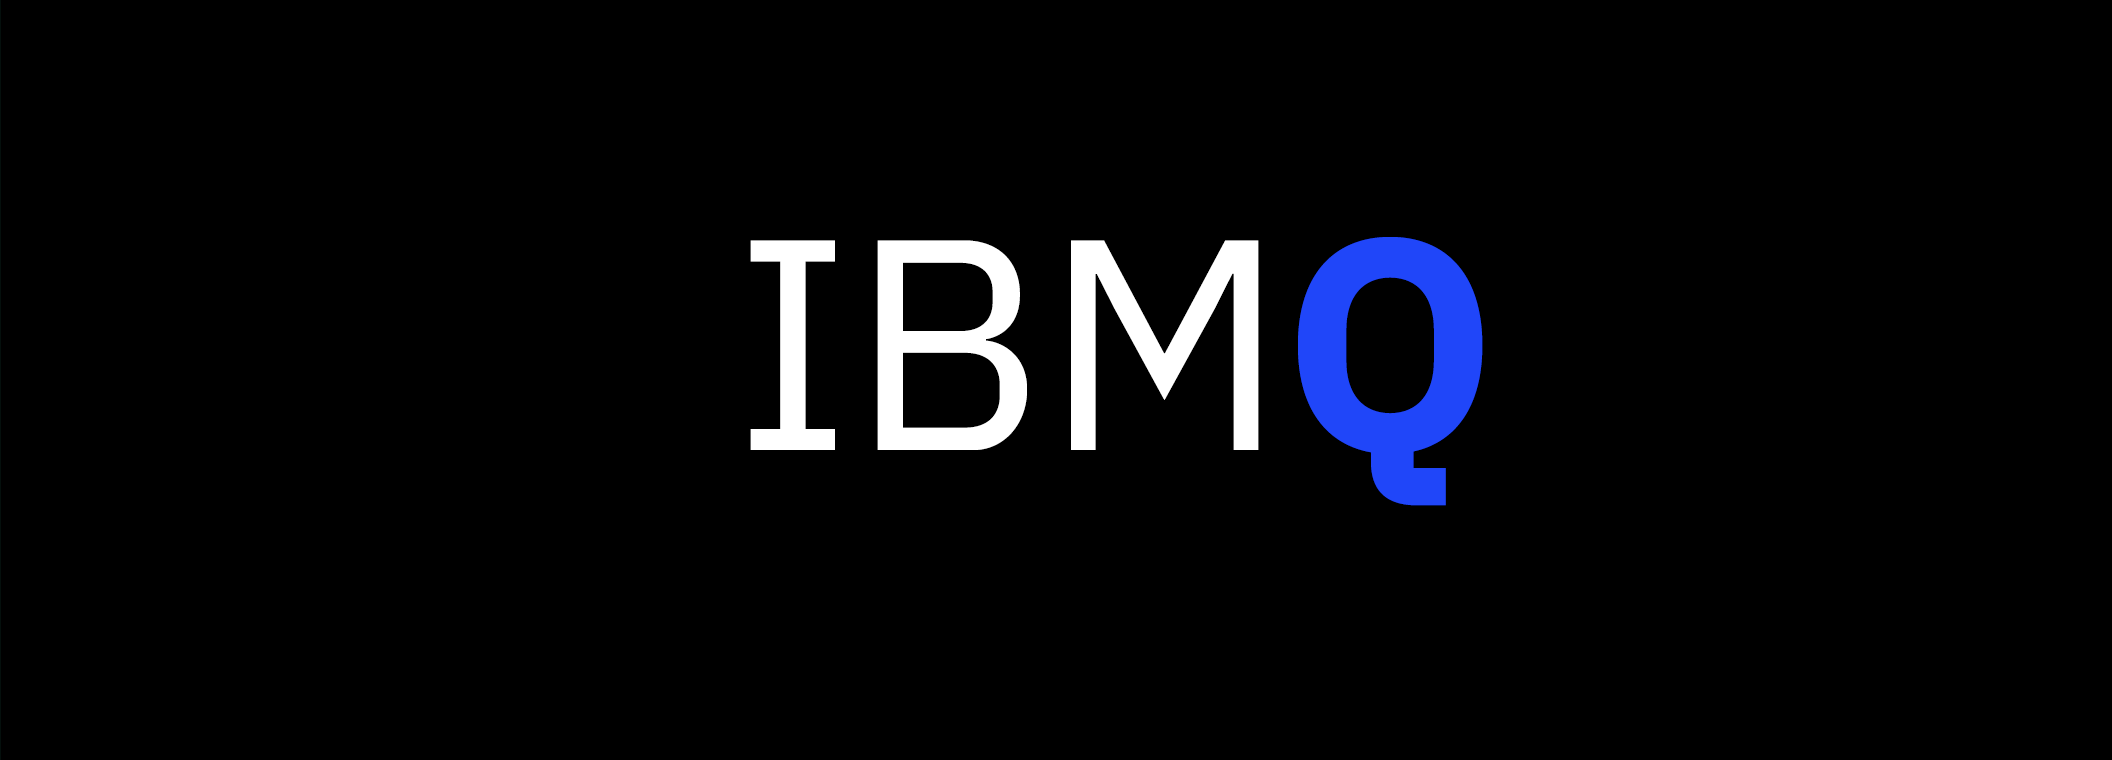 IBM - Statele Unite ale Americii